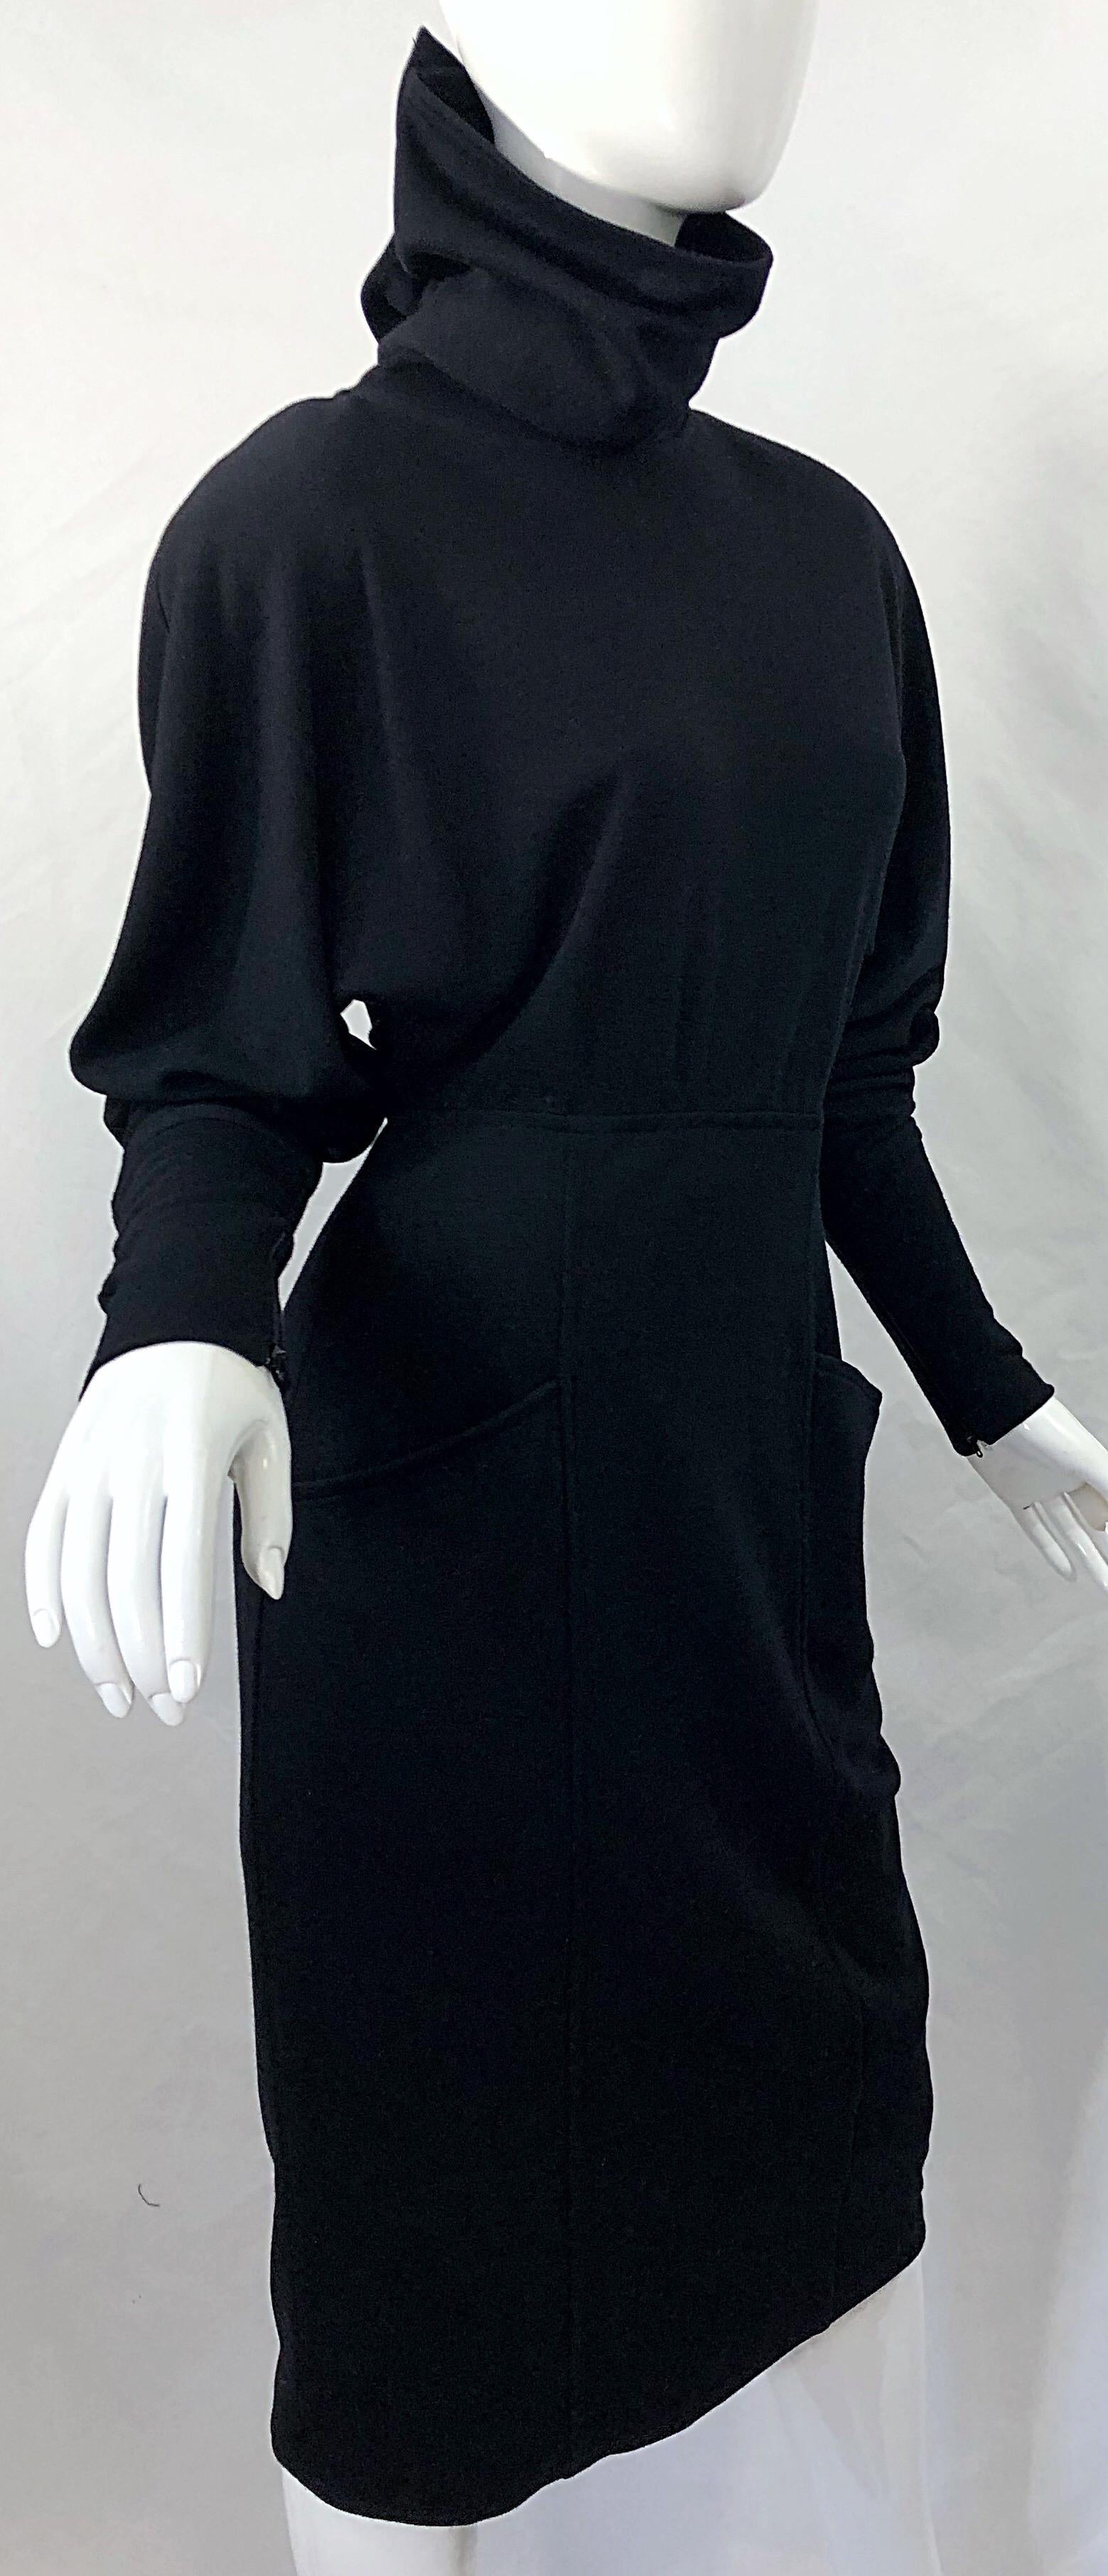 Gucci 1980s Avant Garde Black Size 42 Wool Vintage 80s Turtleneck Sweater Dress For Sale 4